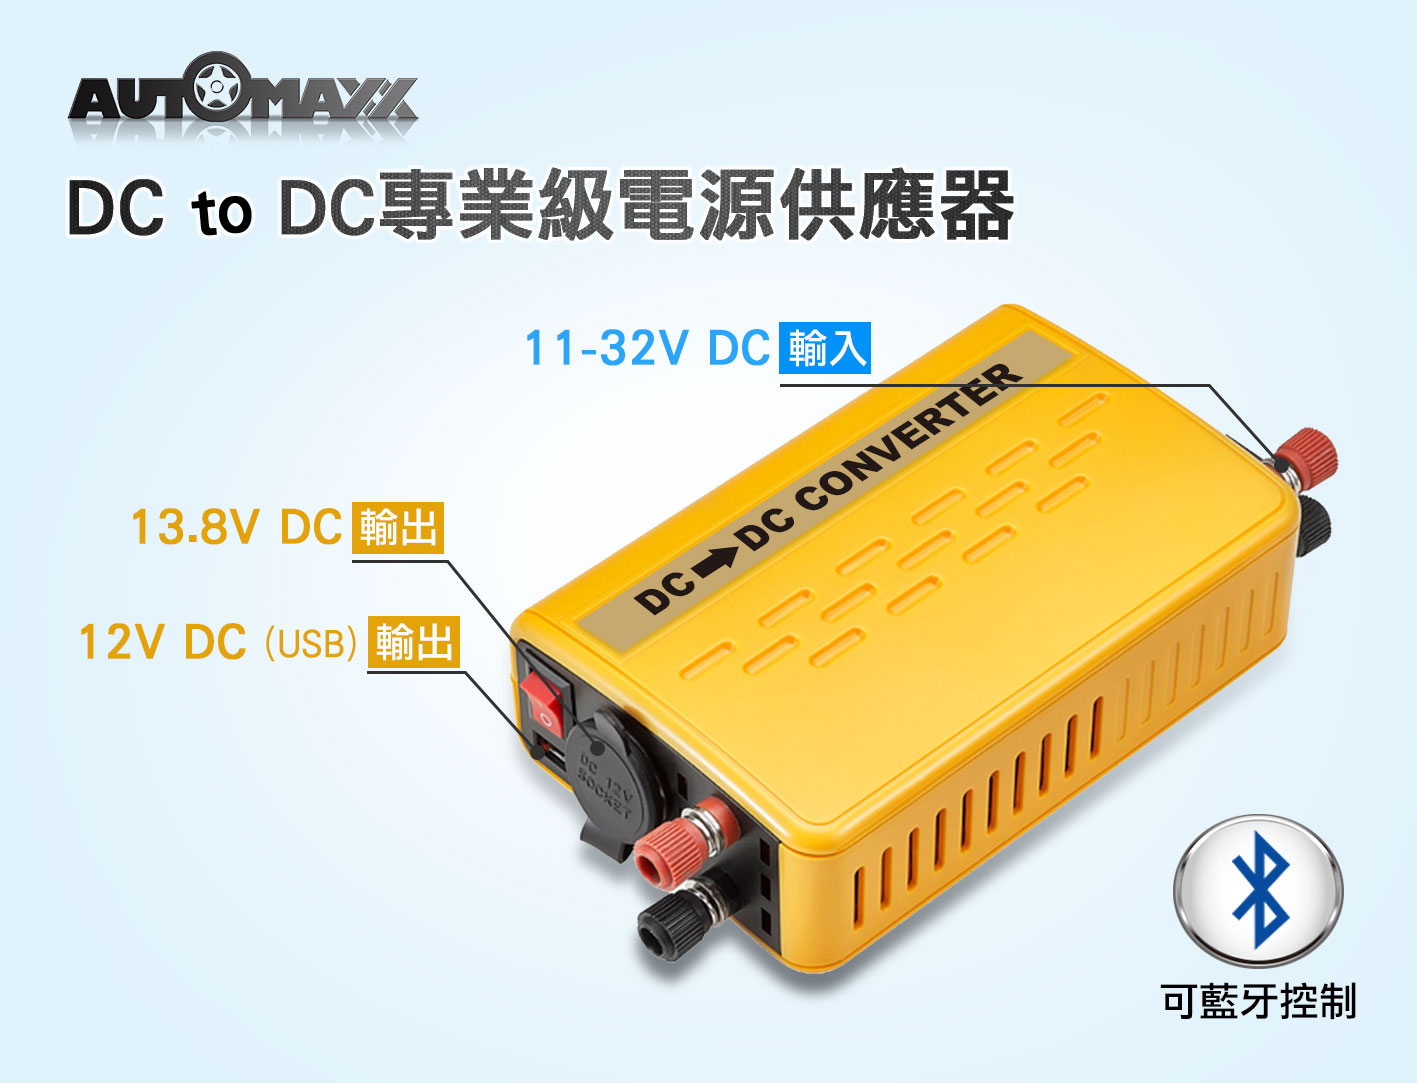 AUTOMAXX,DC to DC 專業級電源供應器